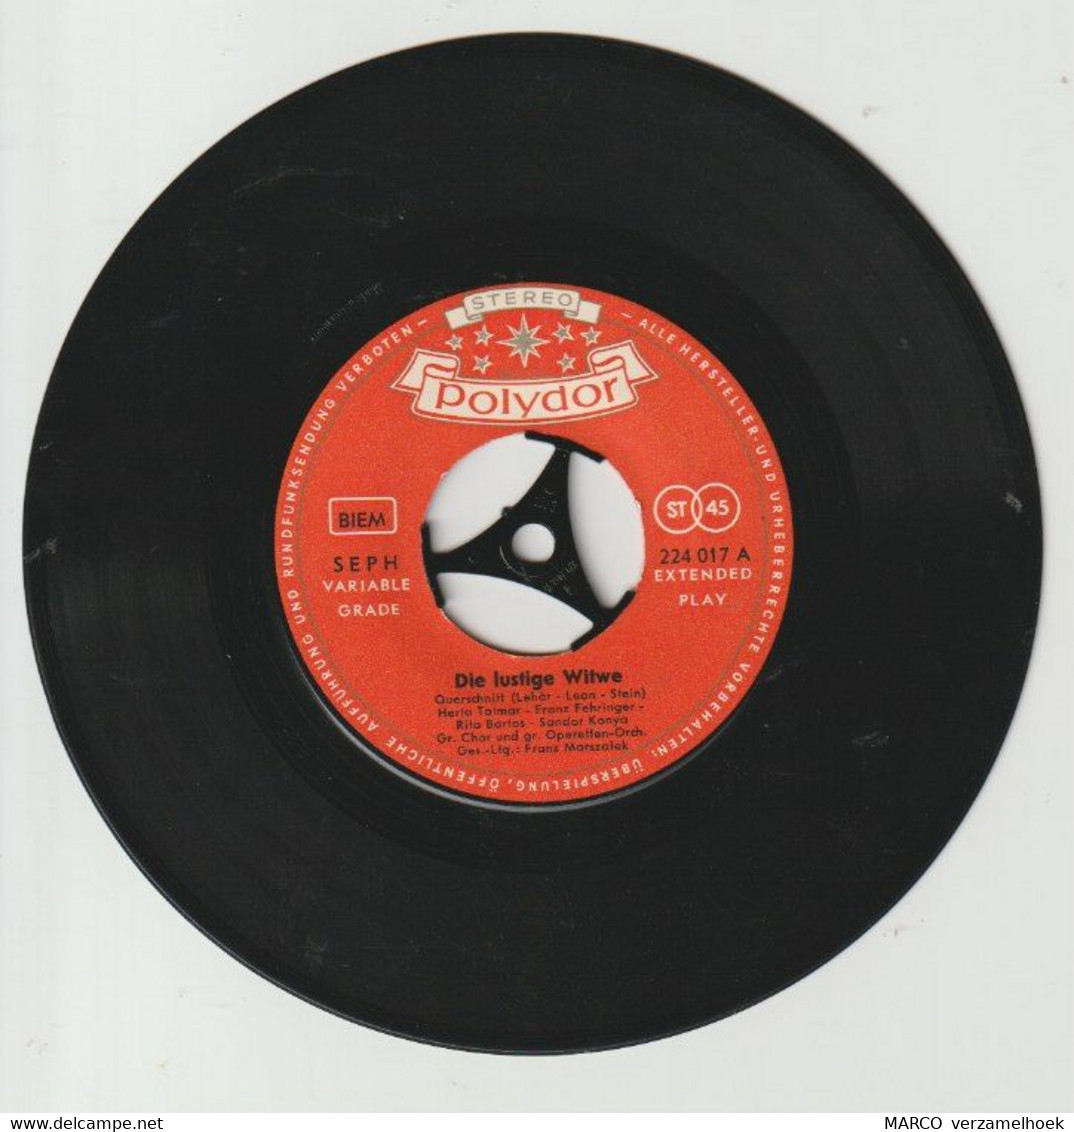 45T Single Die Lustige Witwe Querschnitt (lehár-leon-stein) Jaren 60 Polydor - Classique